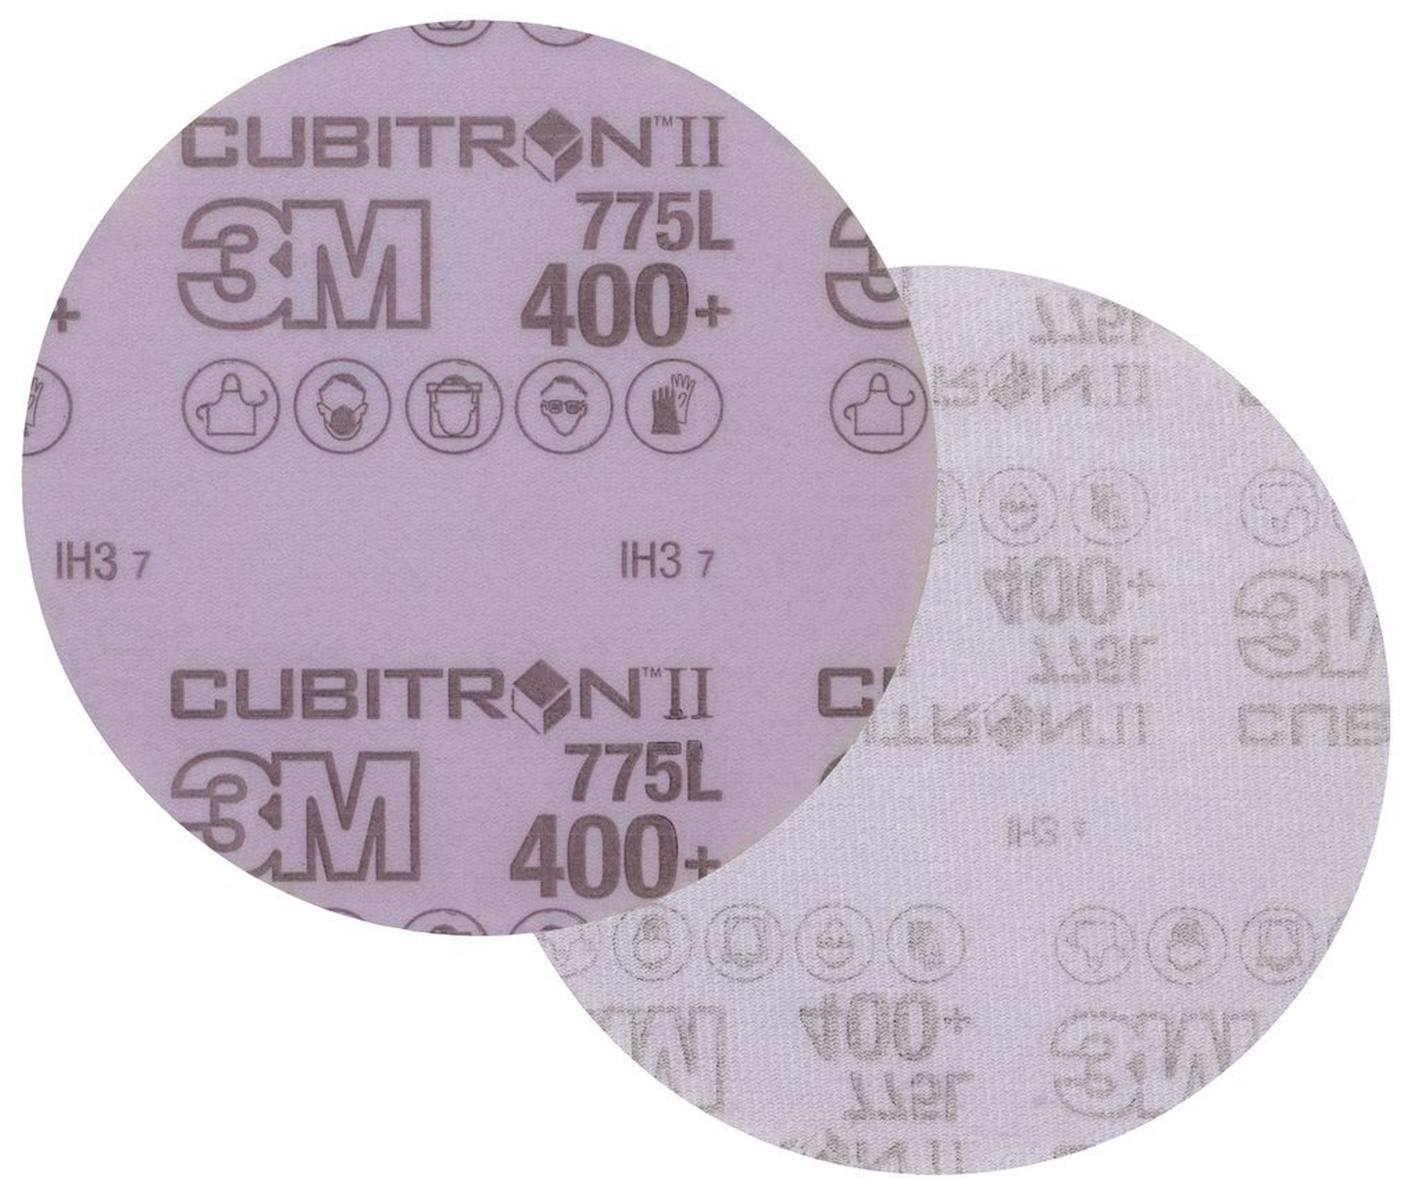 3M Cubitron II Hookit film disc 775L, 125 mm, 400+, unperforated #05055